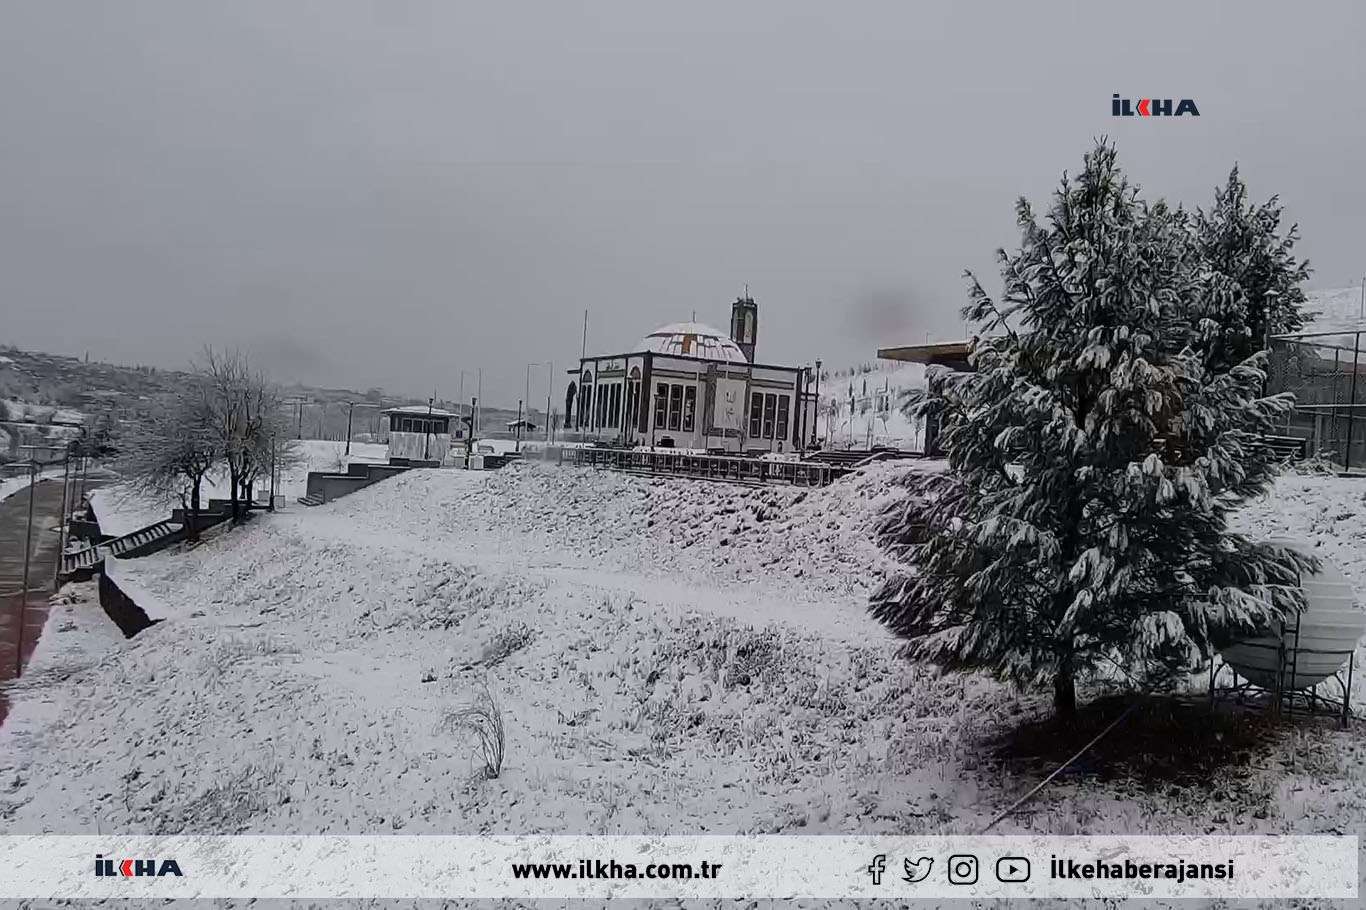 First snowfall of the season turns much of Diyarbakir white